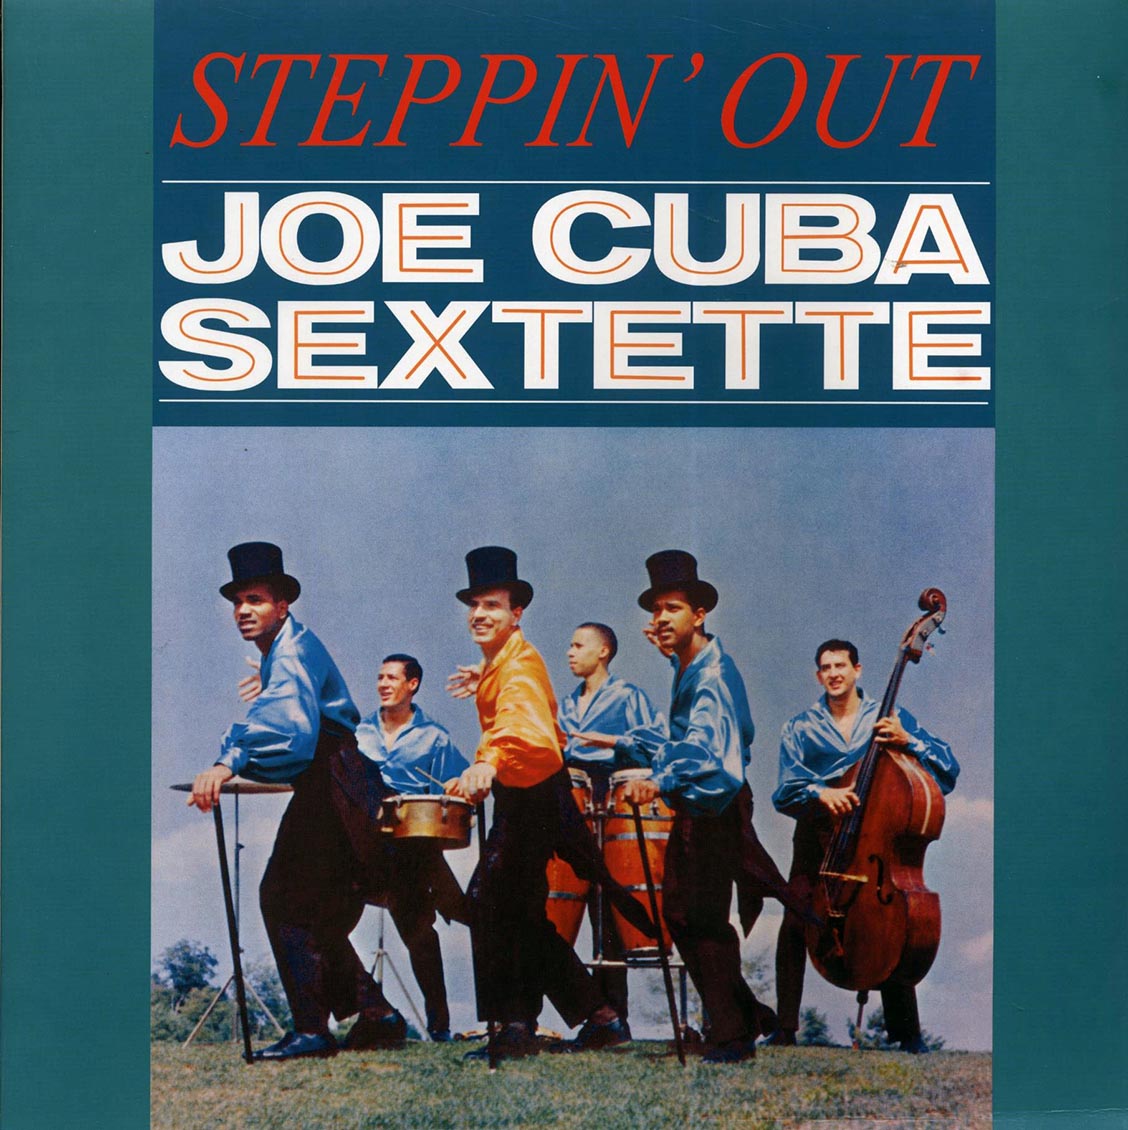 Joe Cuba Sextette - Steppin' Out - Vinyl LP